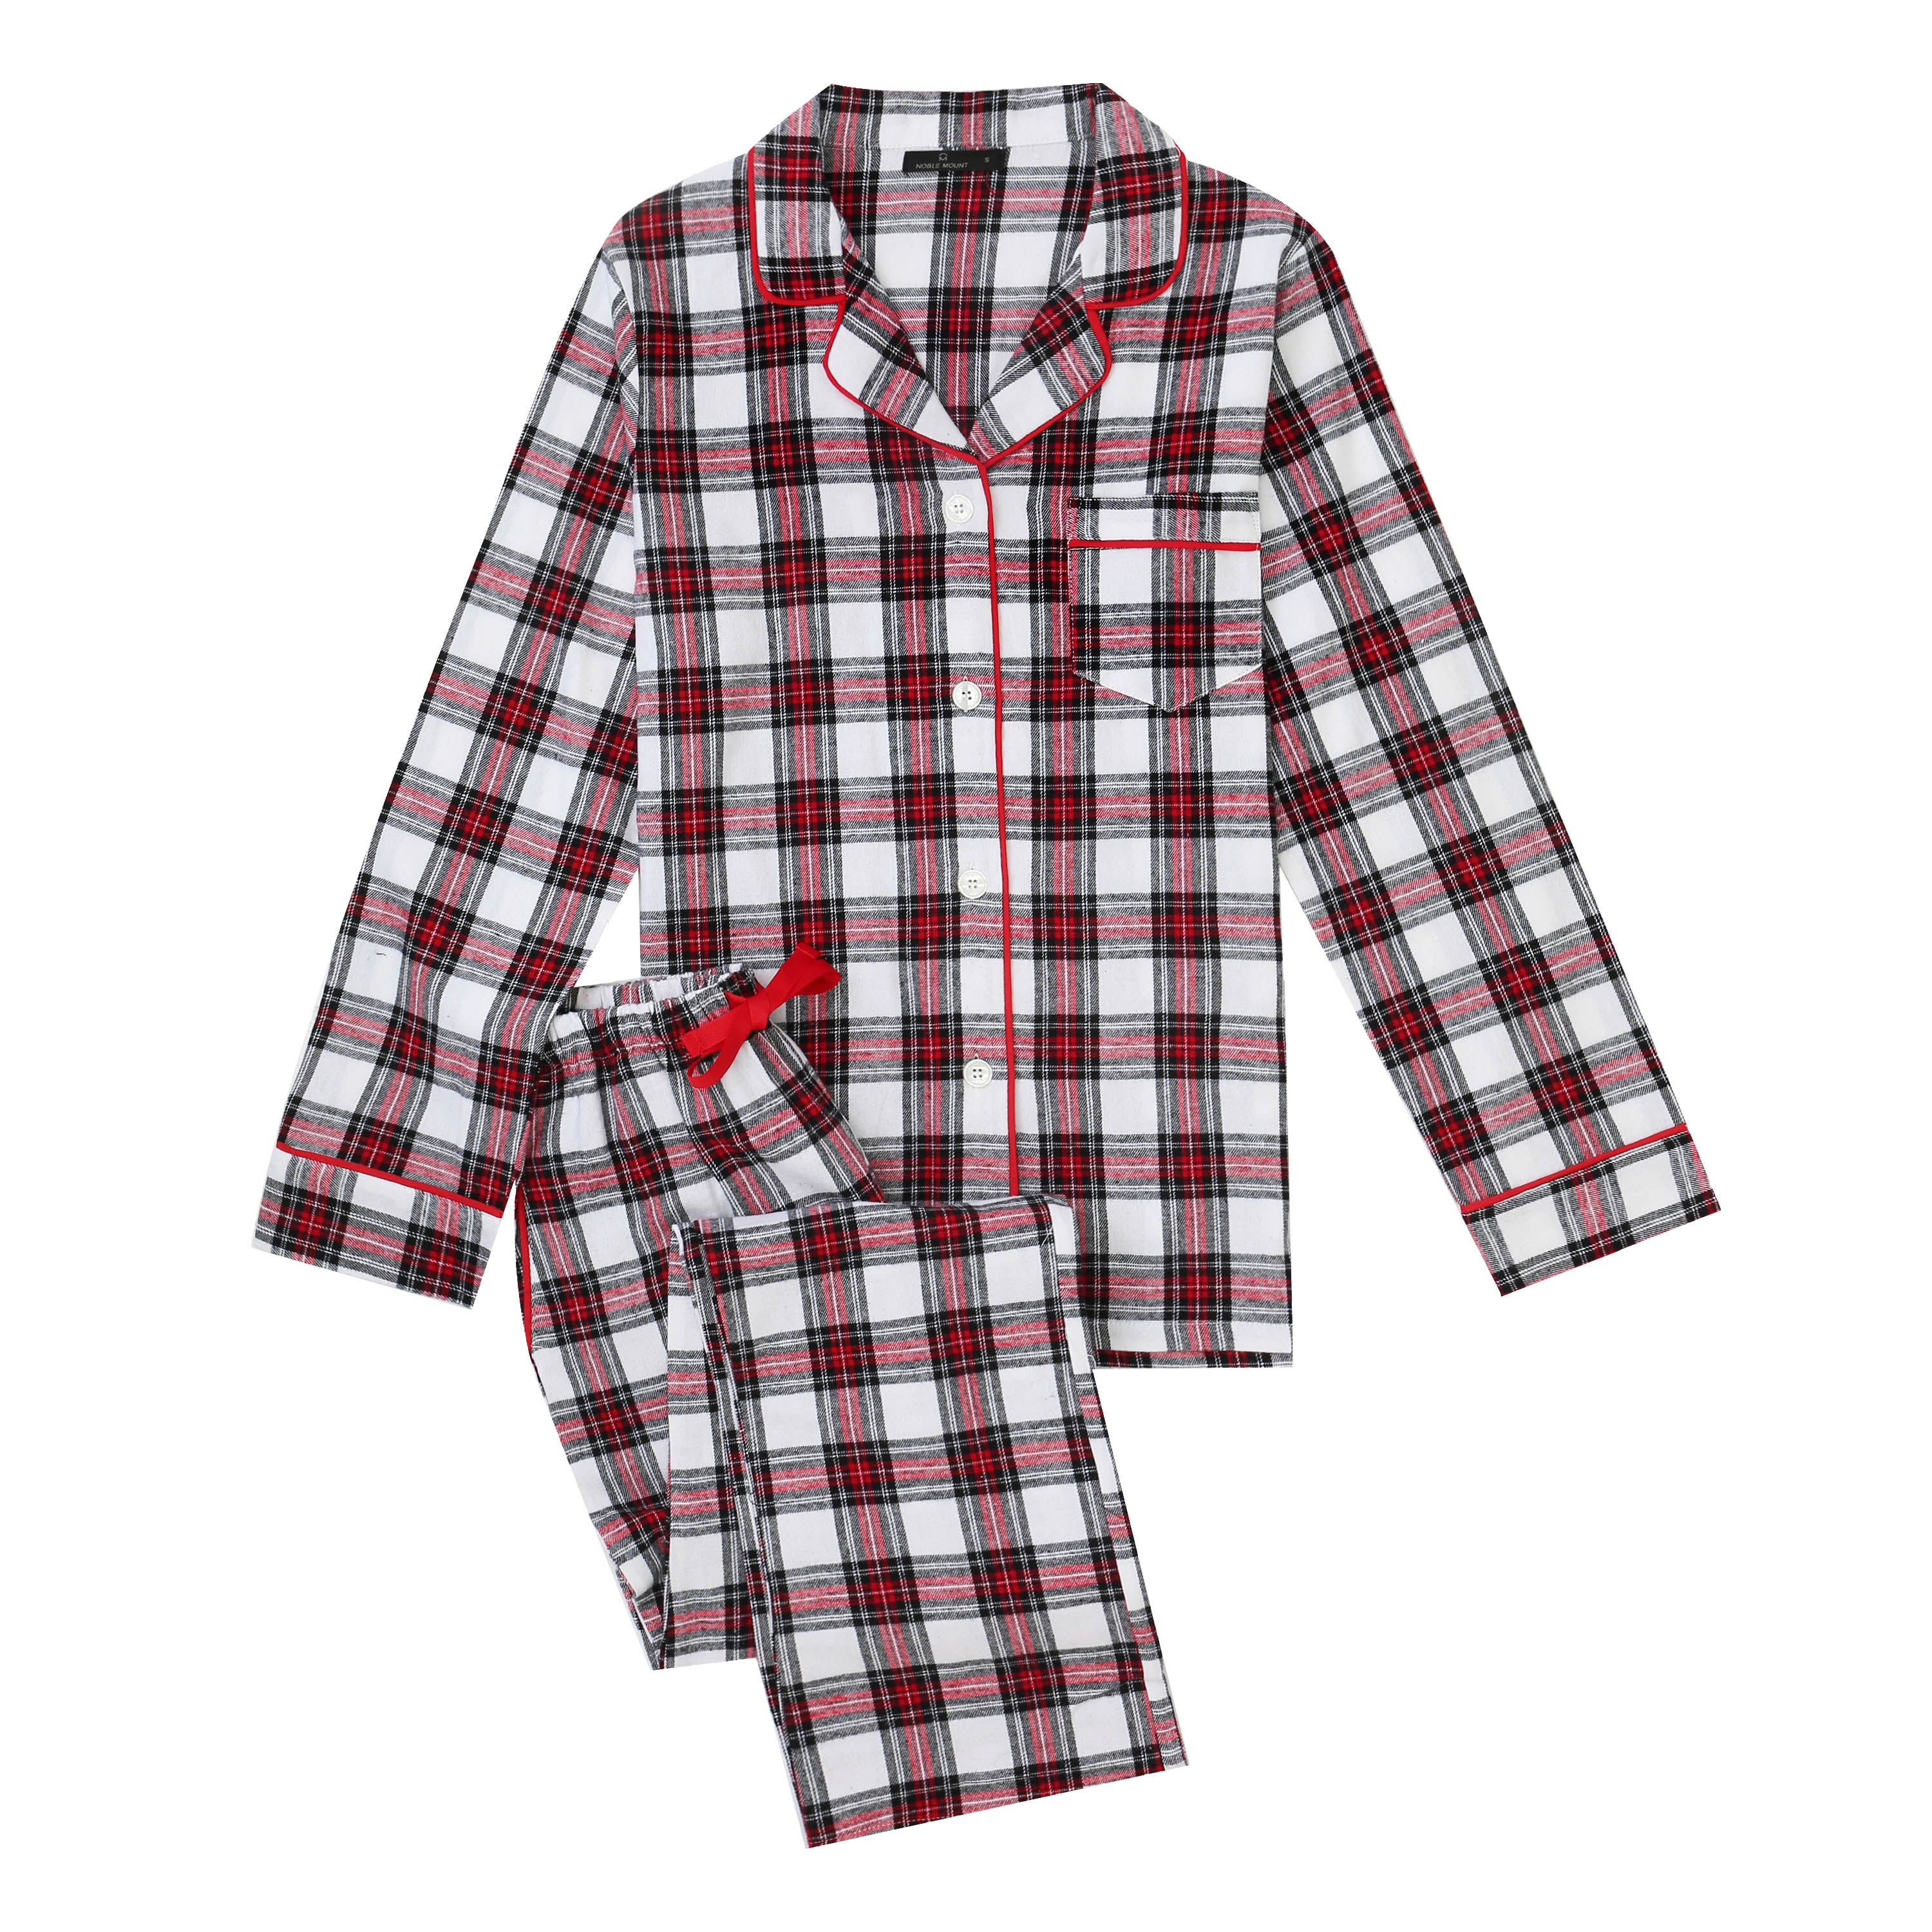 2Pc Lightweight Flannel Womens Pajama Sets - Red-White-Black Plaid